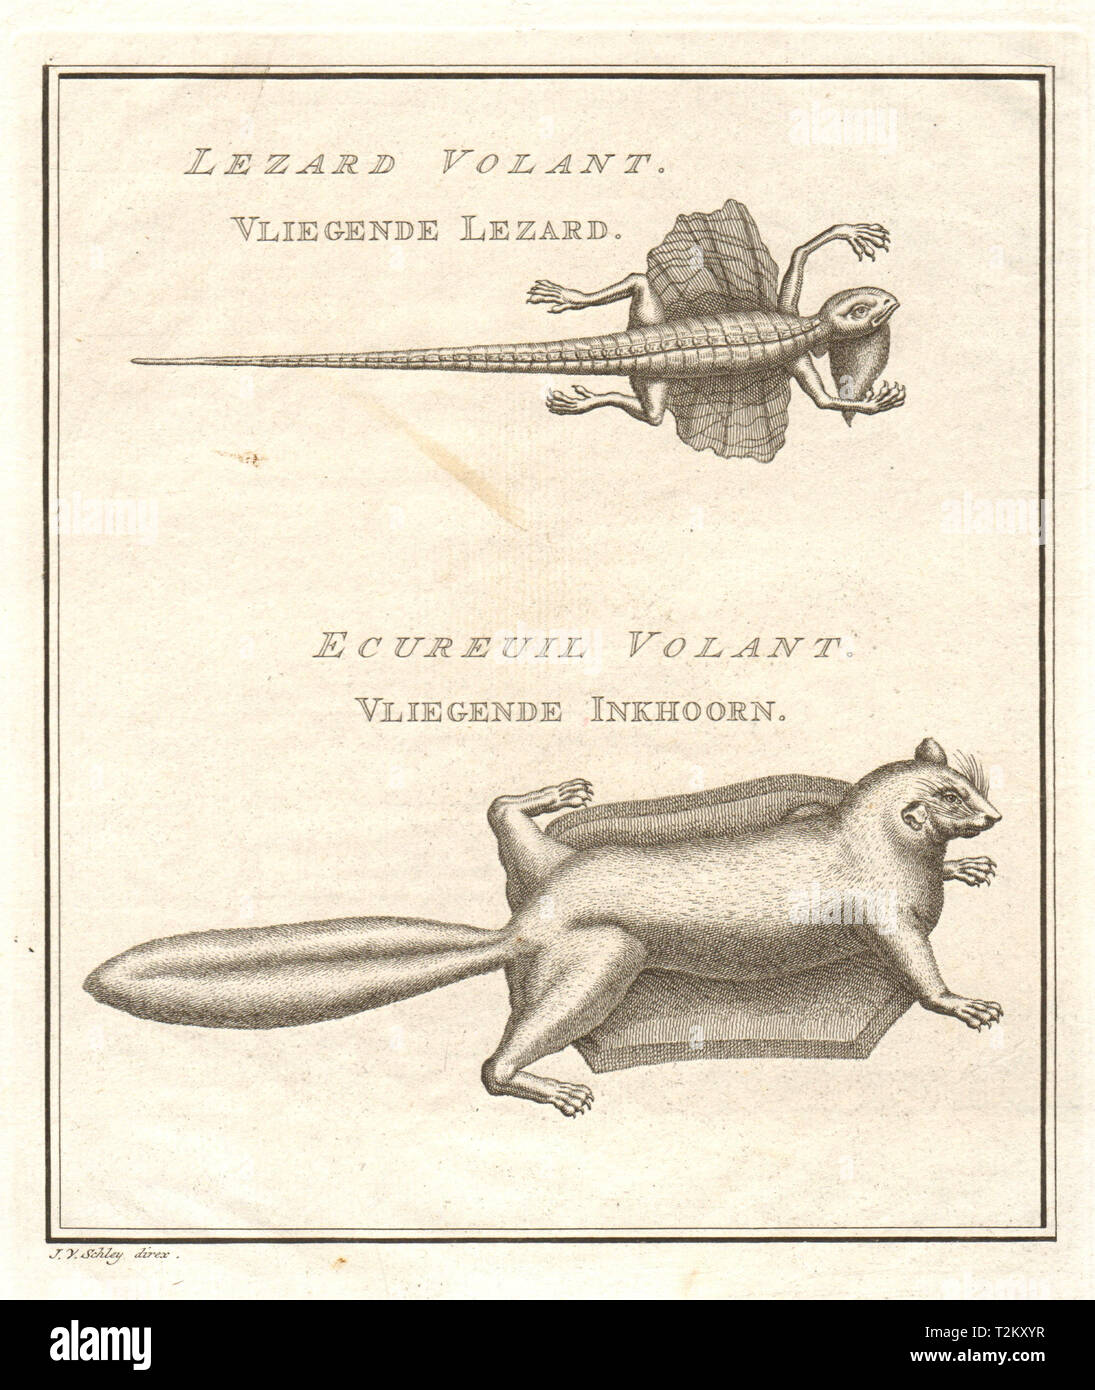 'Lezard volant. Ecureuil volant'. Flying lizard. Flying squirrel. SCHLEY 1757 Stock Photo